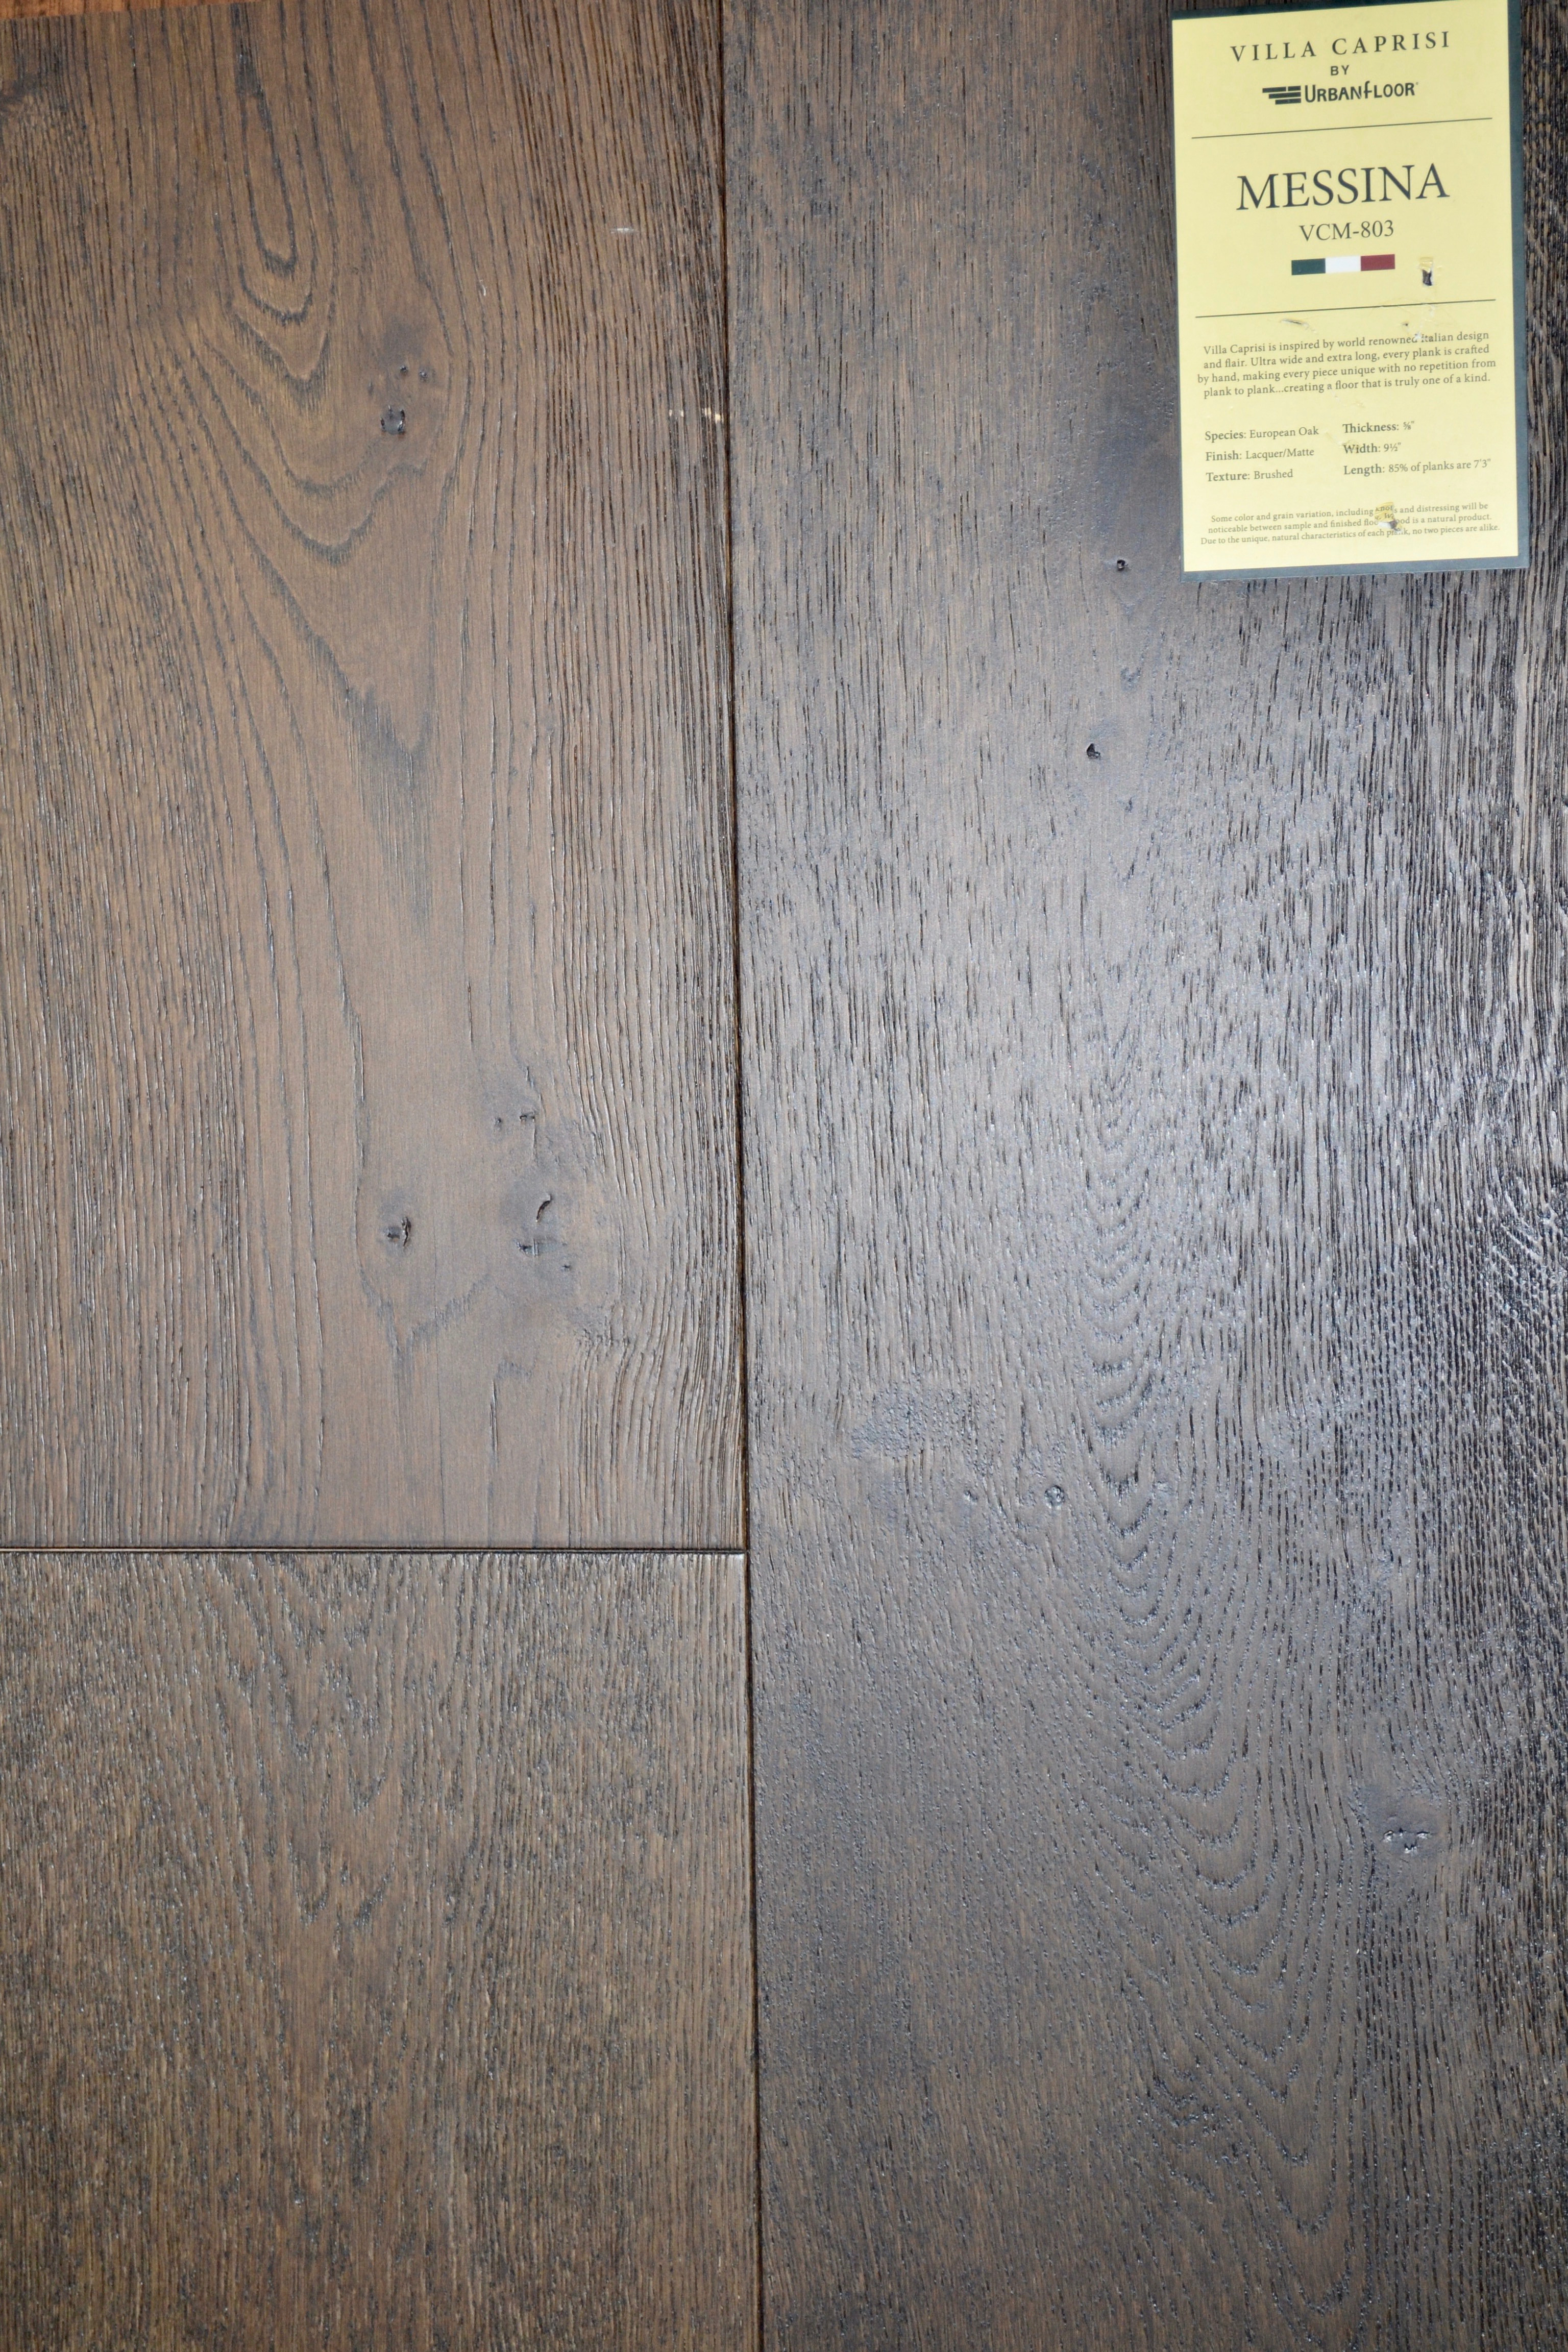 4 inch hardwood flooring of villa caprisi fine european hardwood millennium hardwood regarding european style inspired designer oak floor messina by villa caprisi